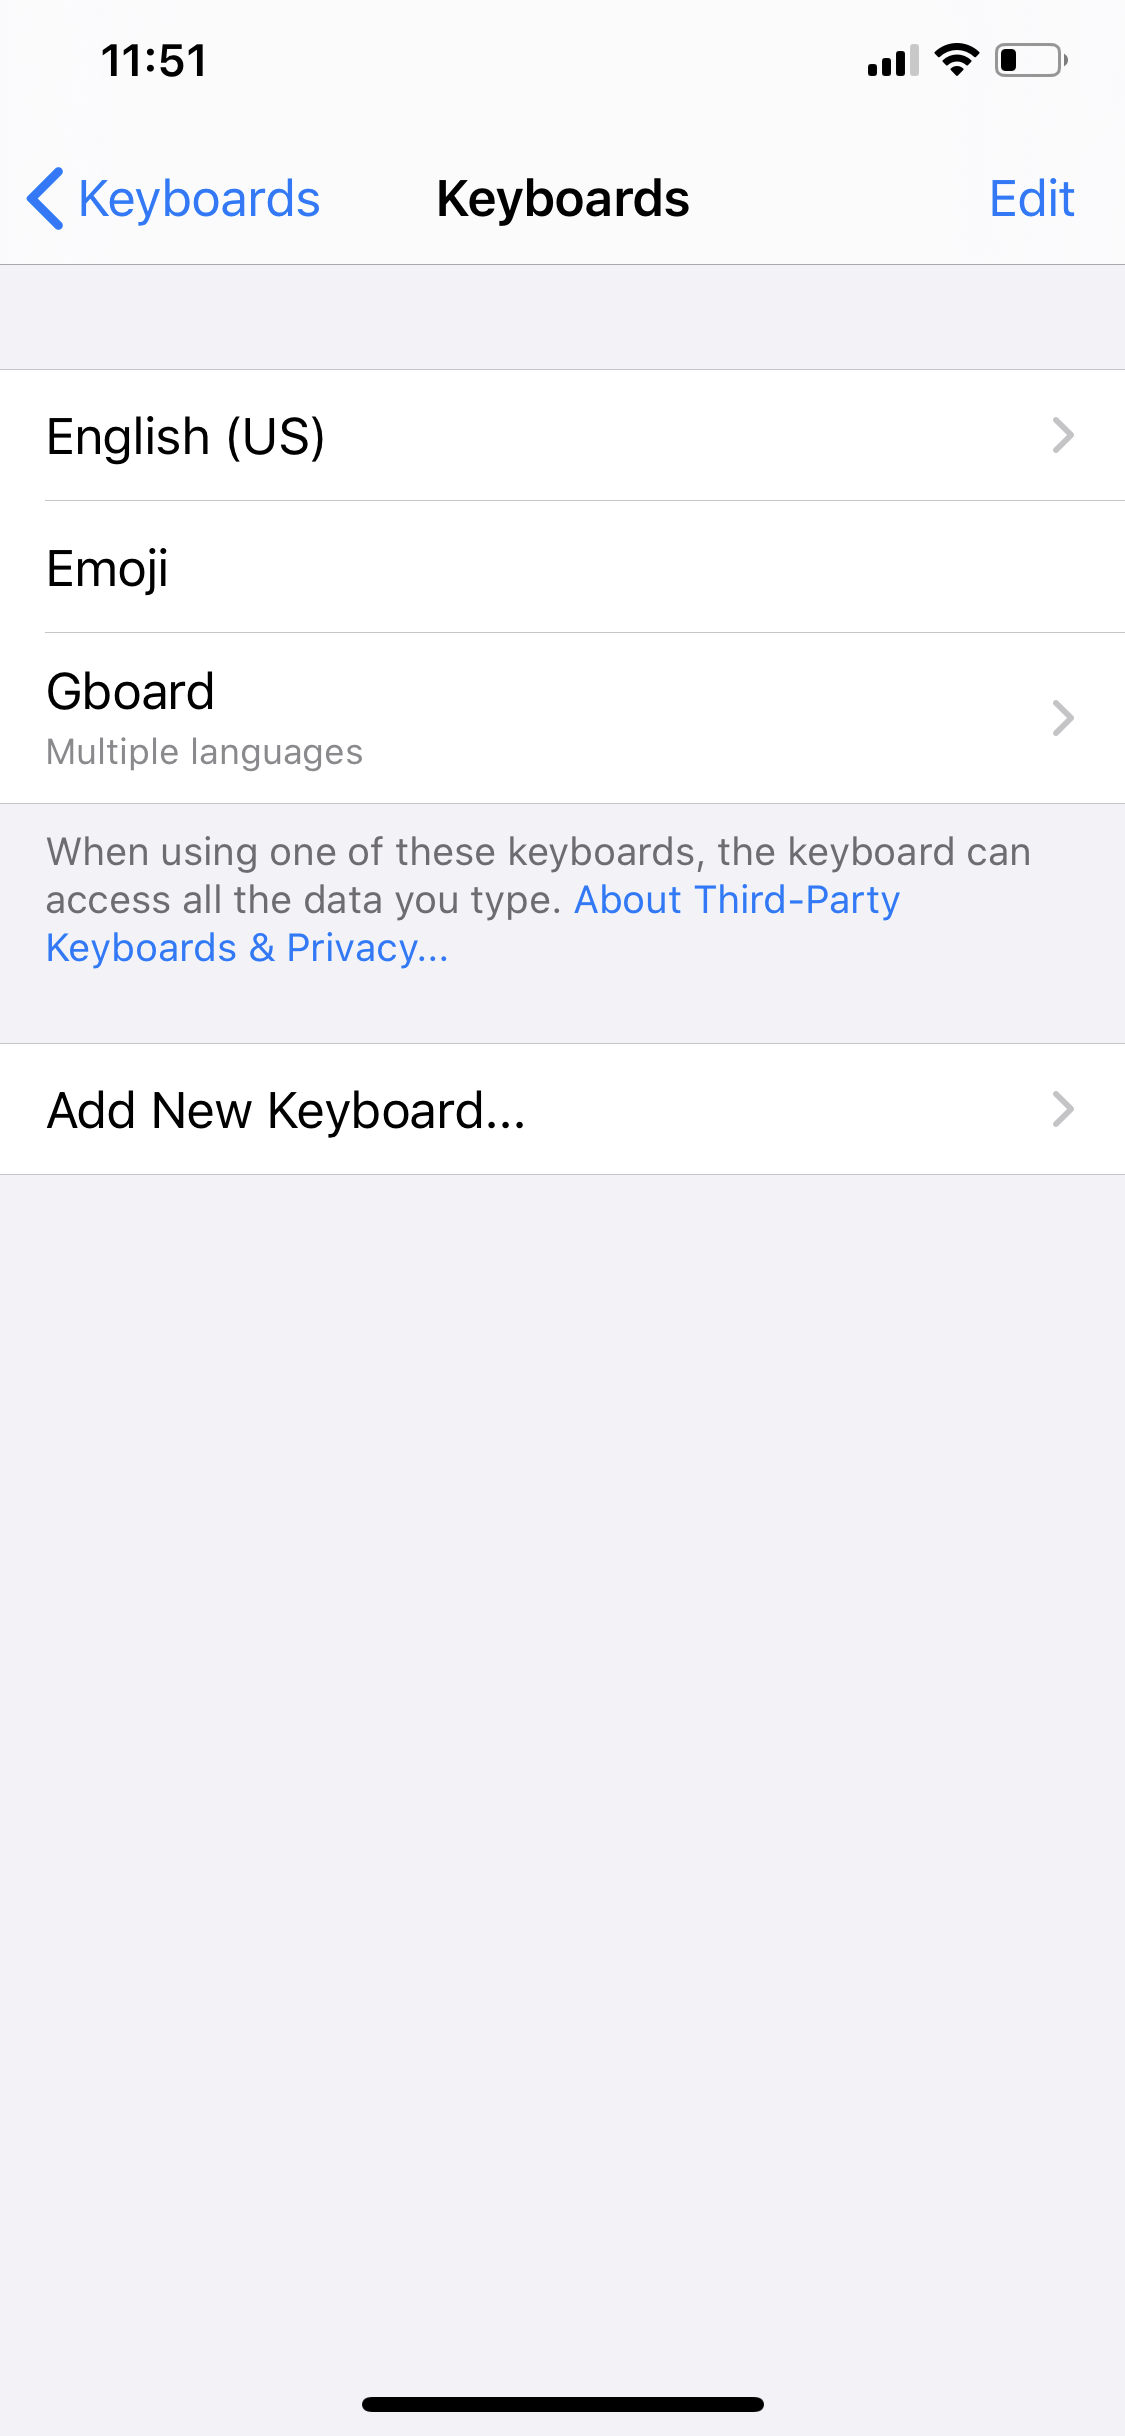 Add New Keyboard